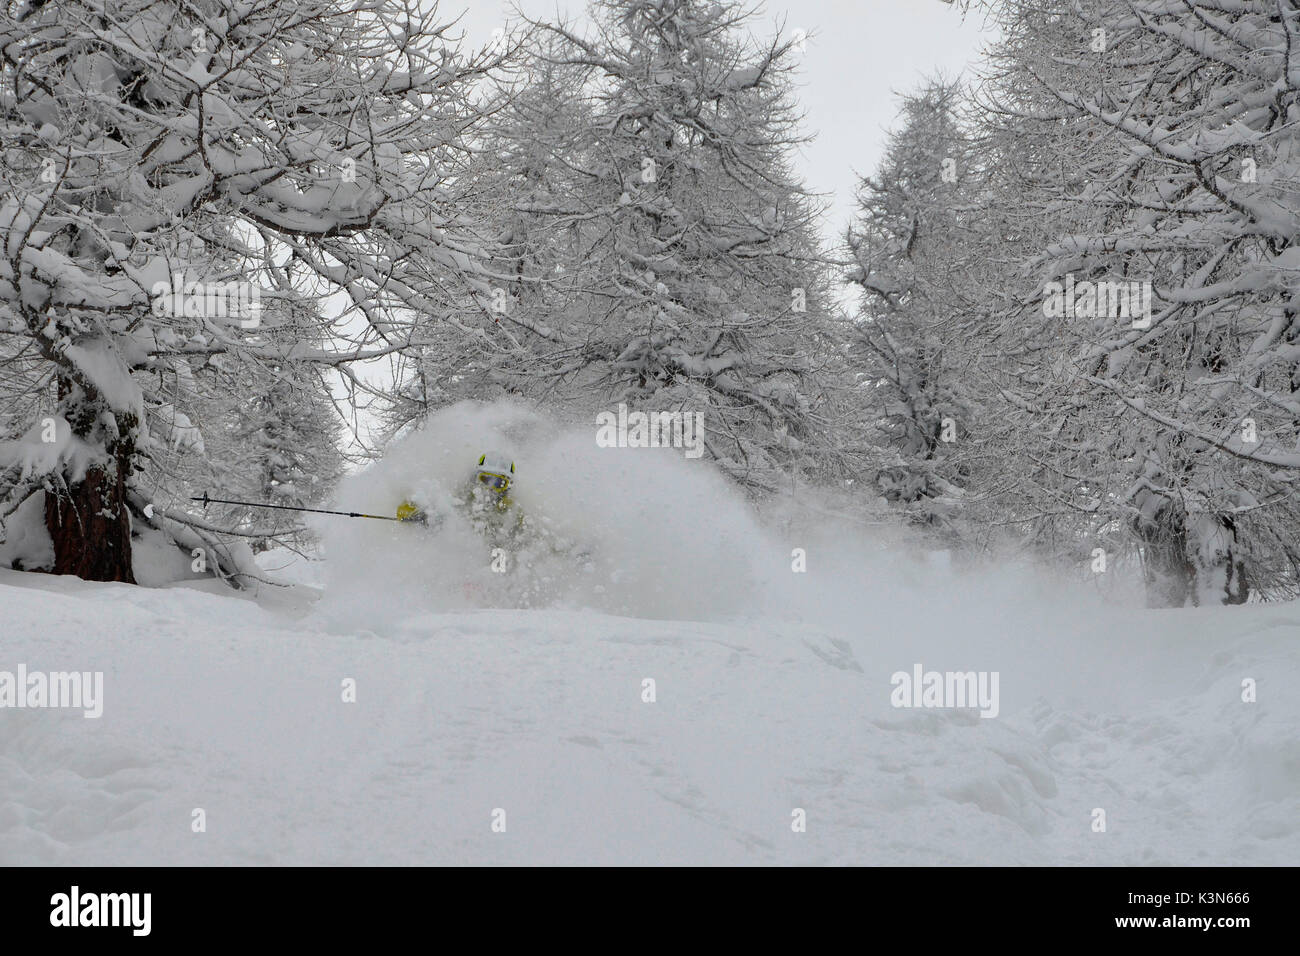 Cielo Freeride con mucha nieve,(faceshot),Prali, Piamonte, Italia Foto de stock